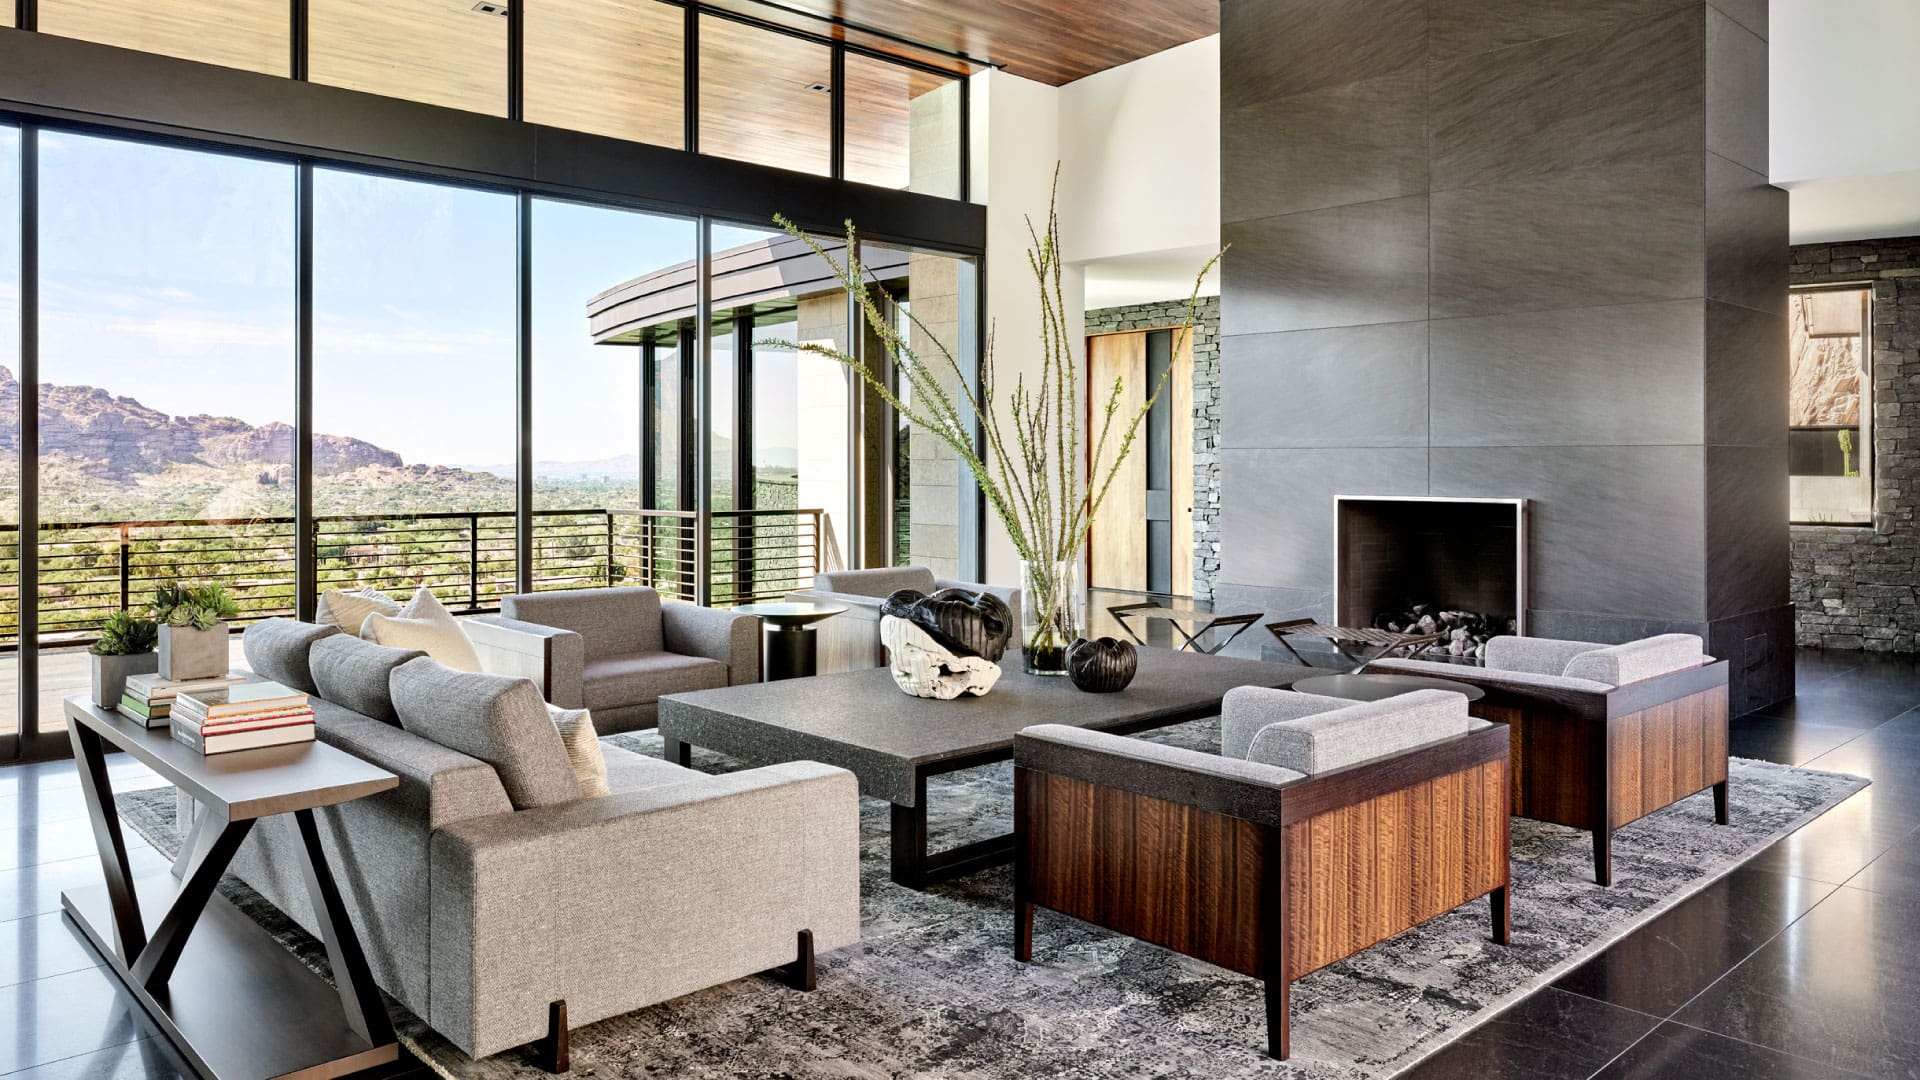 Living room interior design in luxury home in scottsdale arizona by designer anita lang imi design studio.